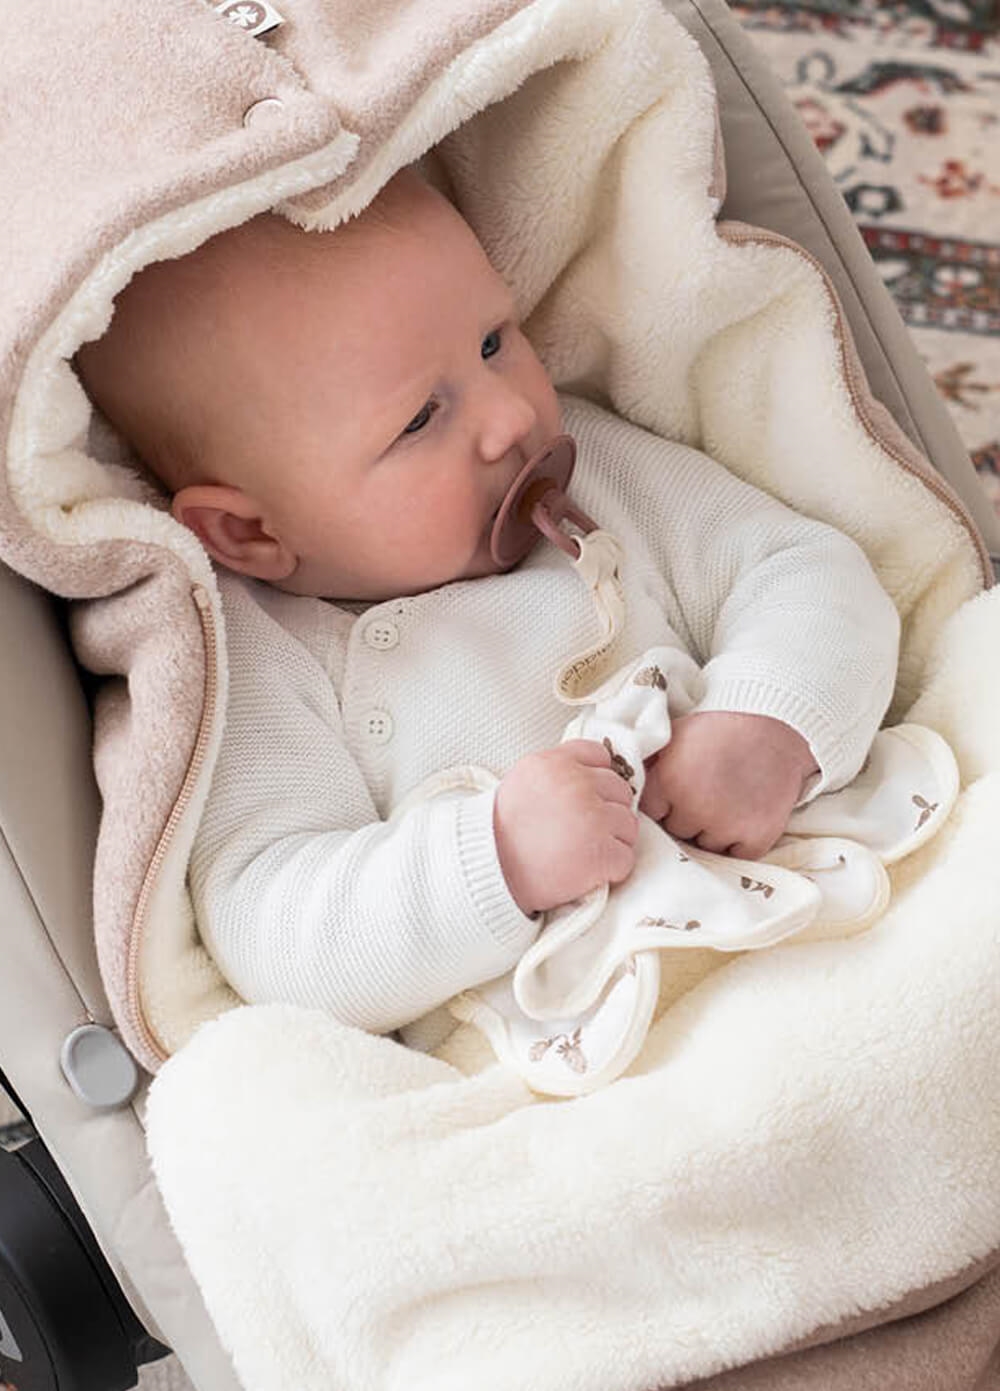 Pino Organic Cotton Knit Newborn Cardigan in White | Noppies Baby